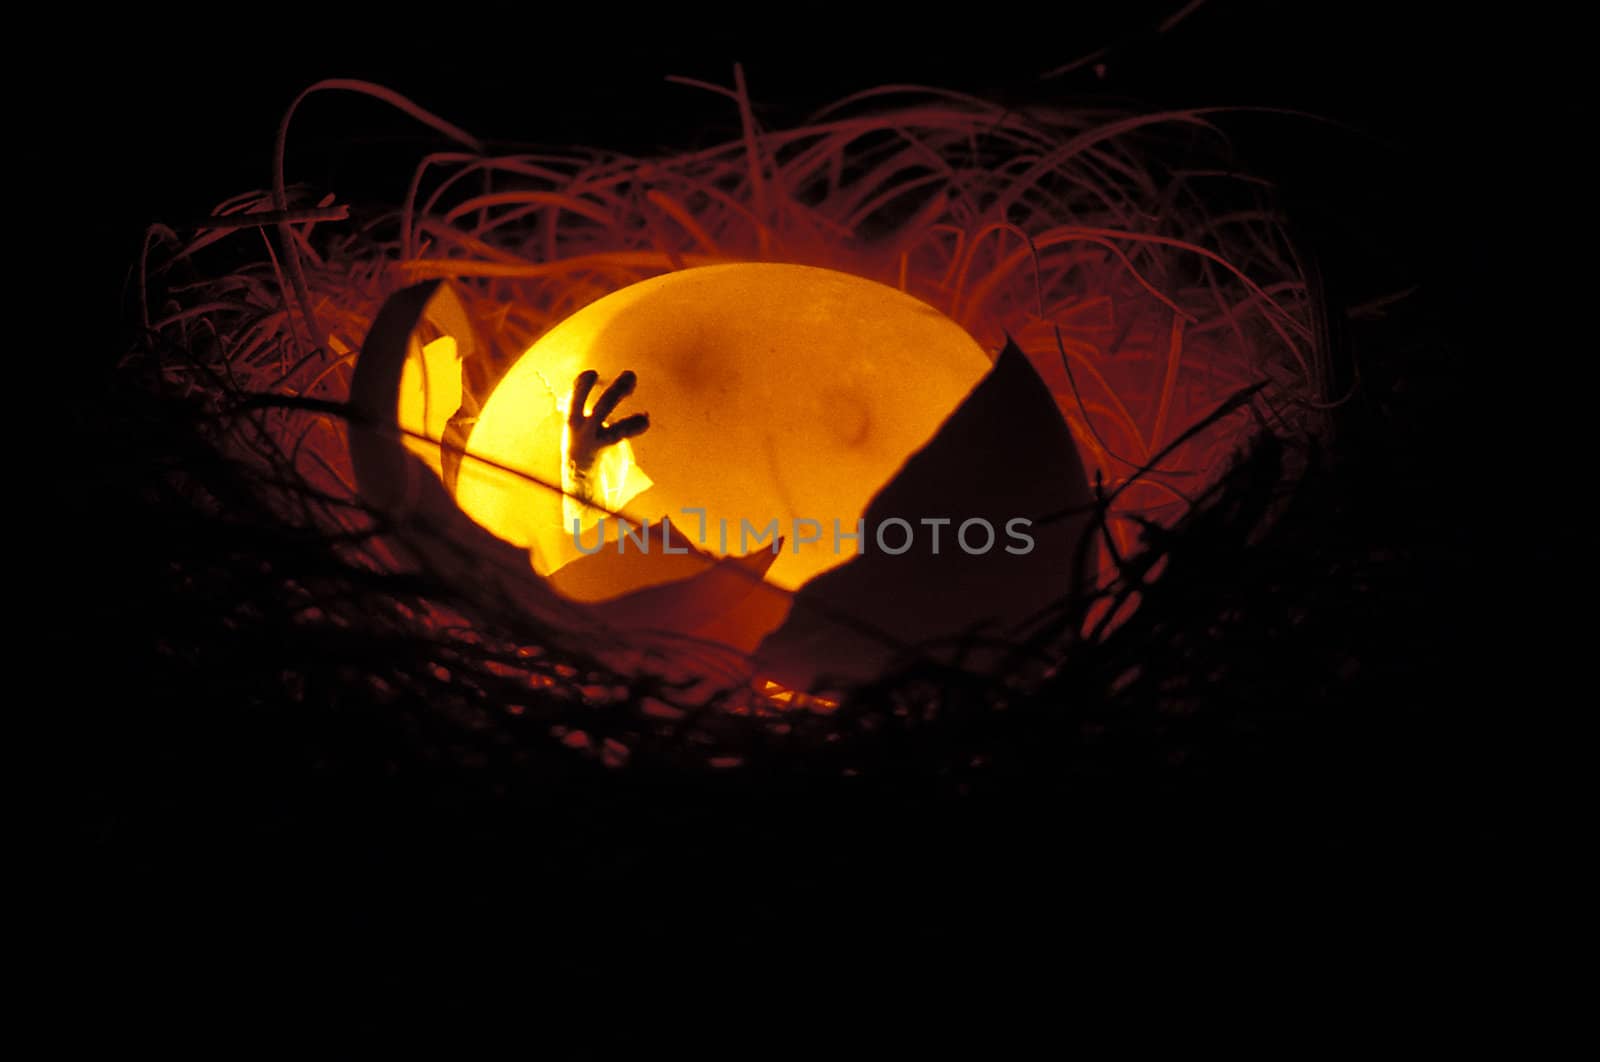 A nest of a weird alien creature with a hatching egg glowing